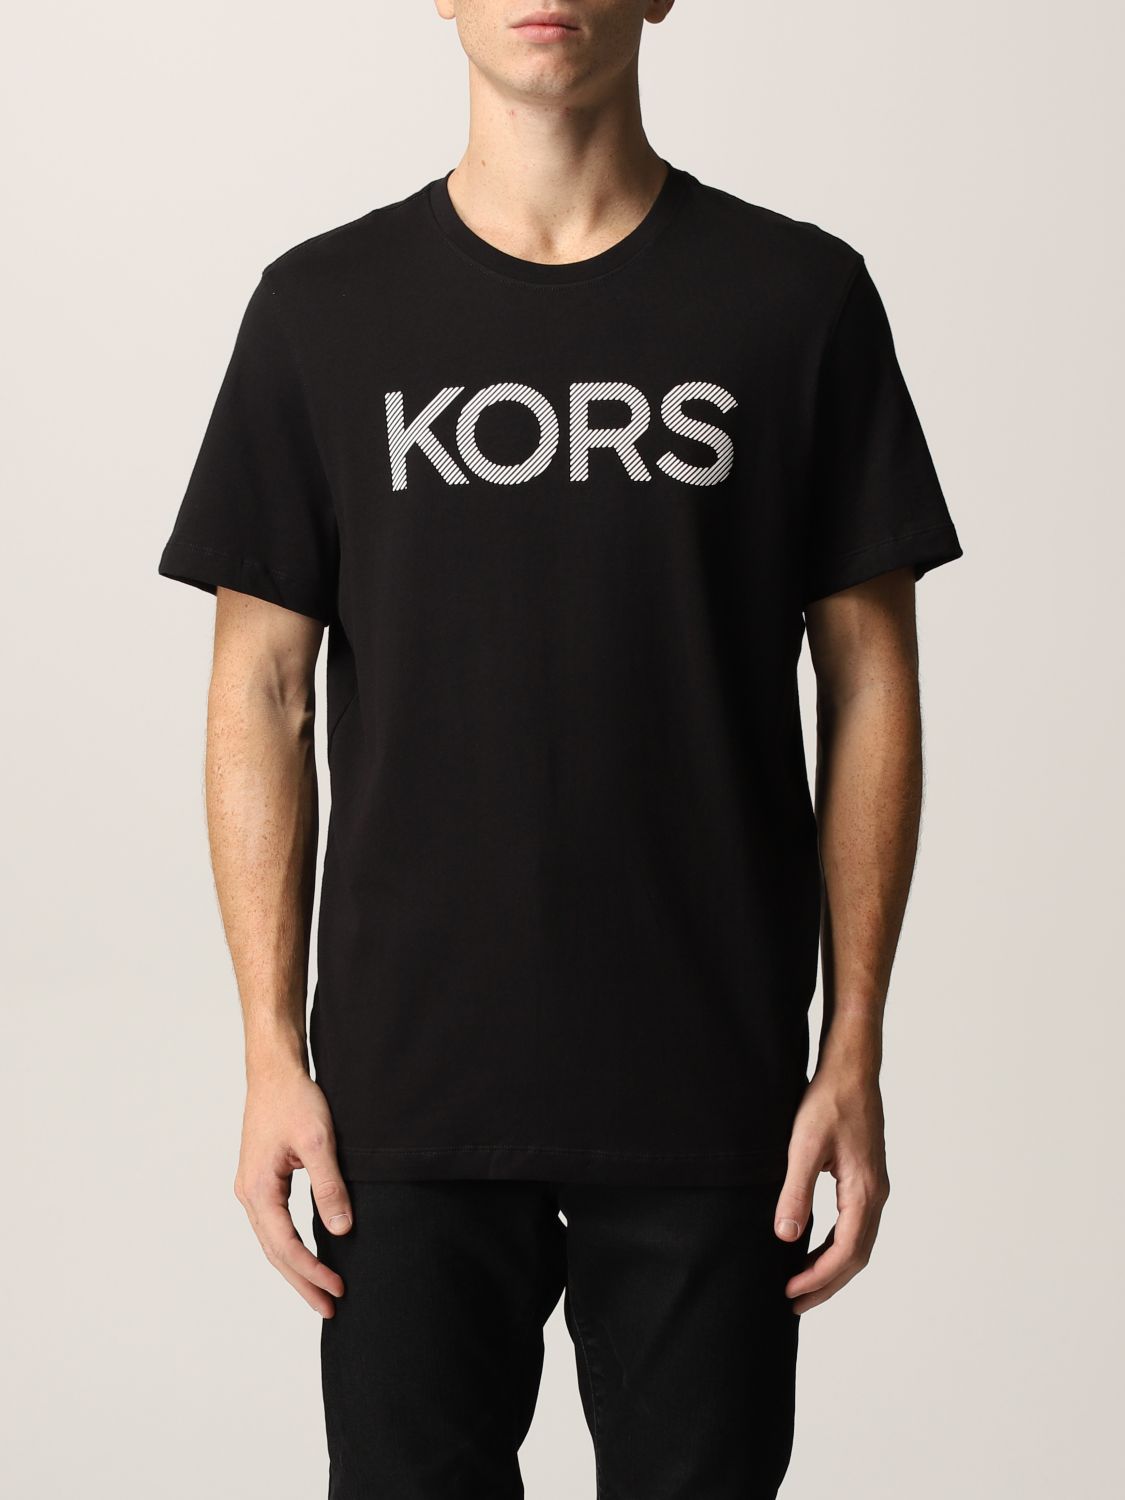 MICHAEL MICHAEL KORS: t-shirt for man - Black | Michael Michael Kors t-shirt  CF150GAFV4 online on 